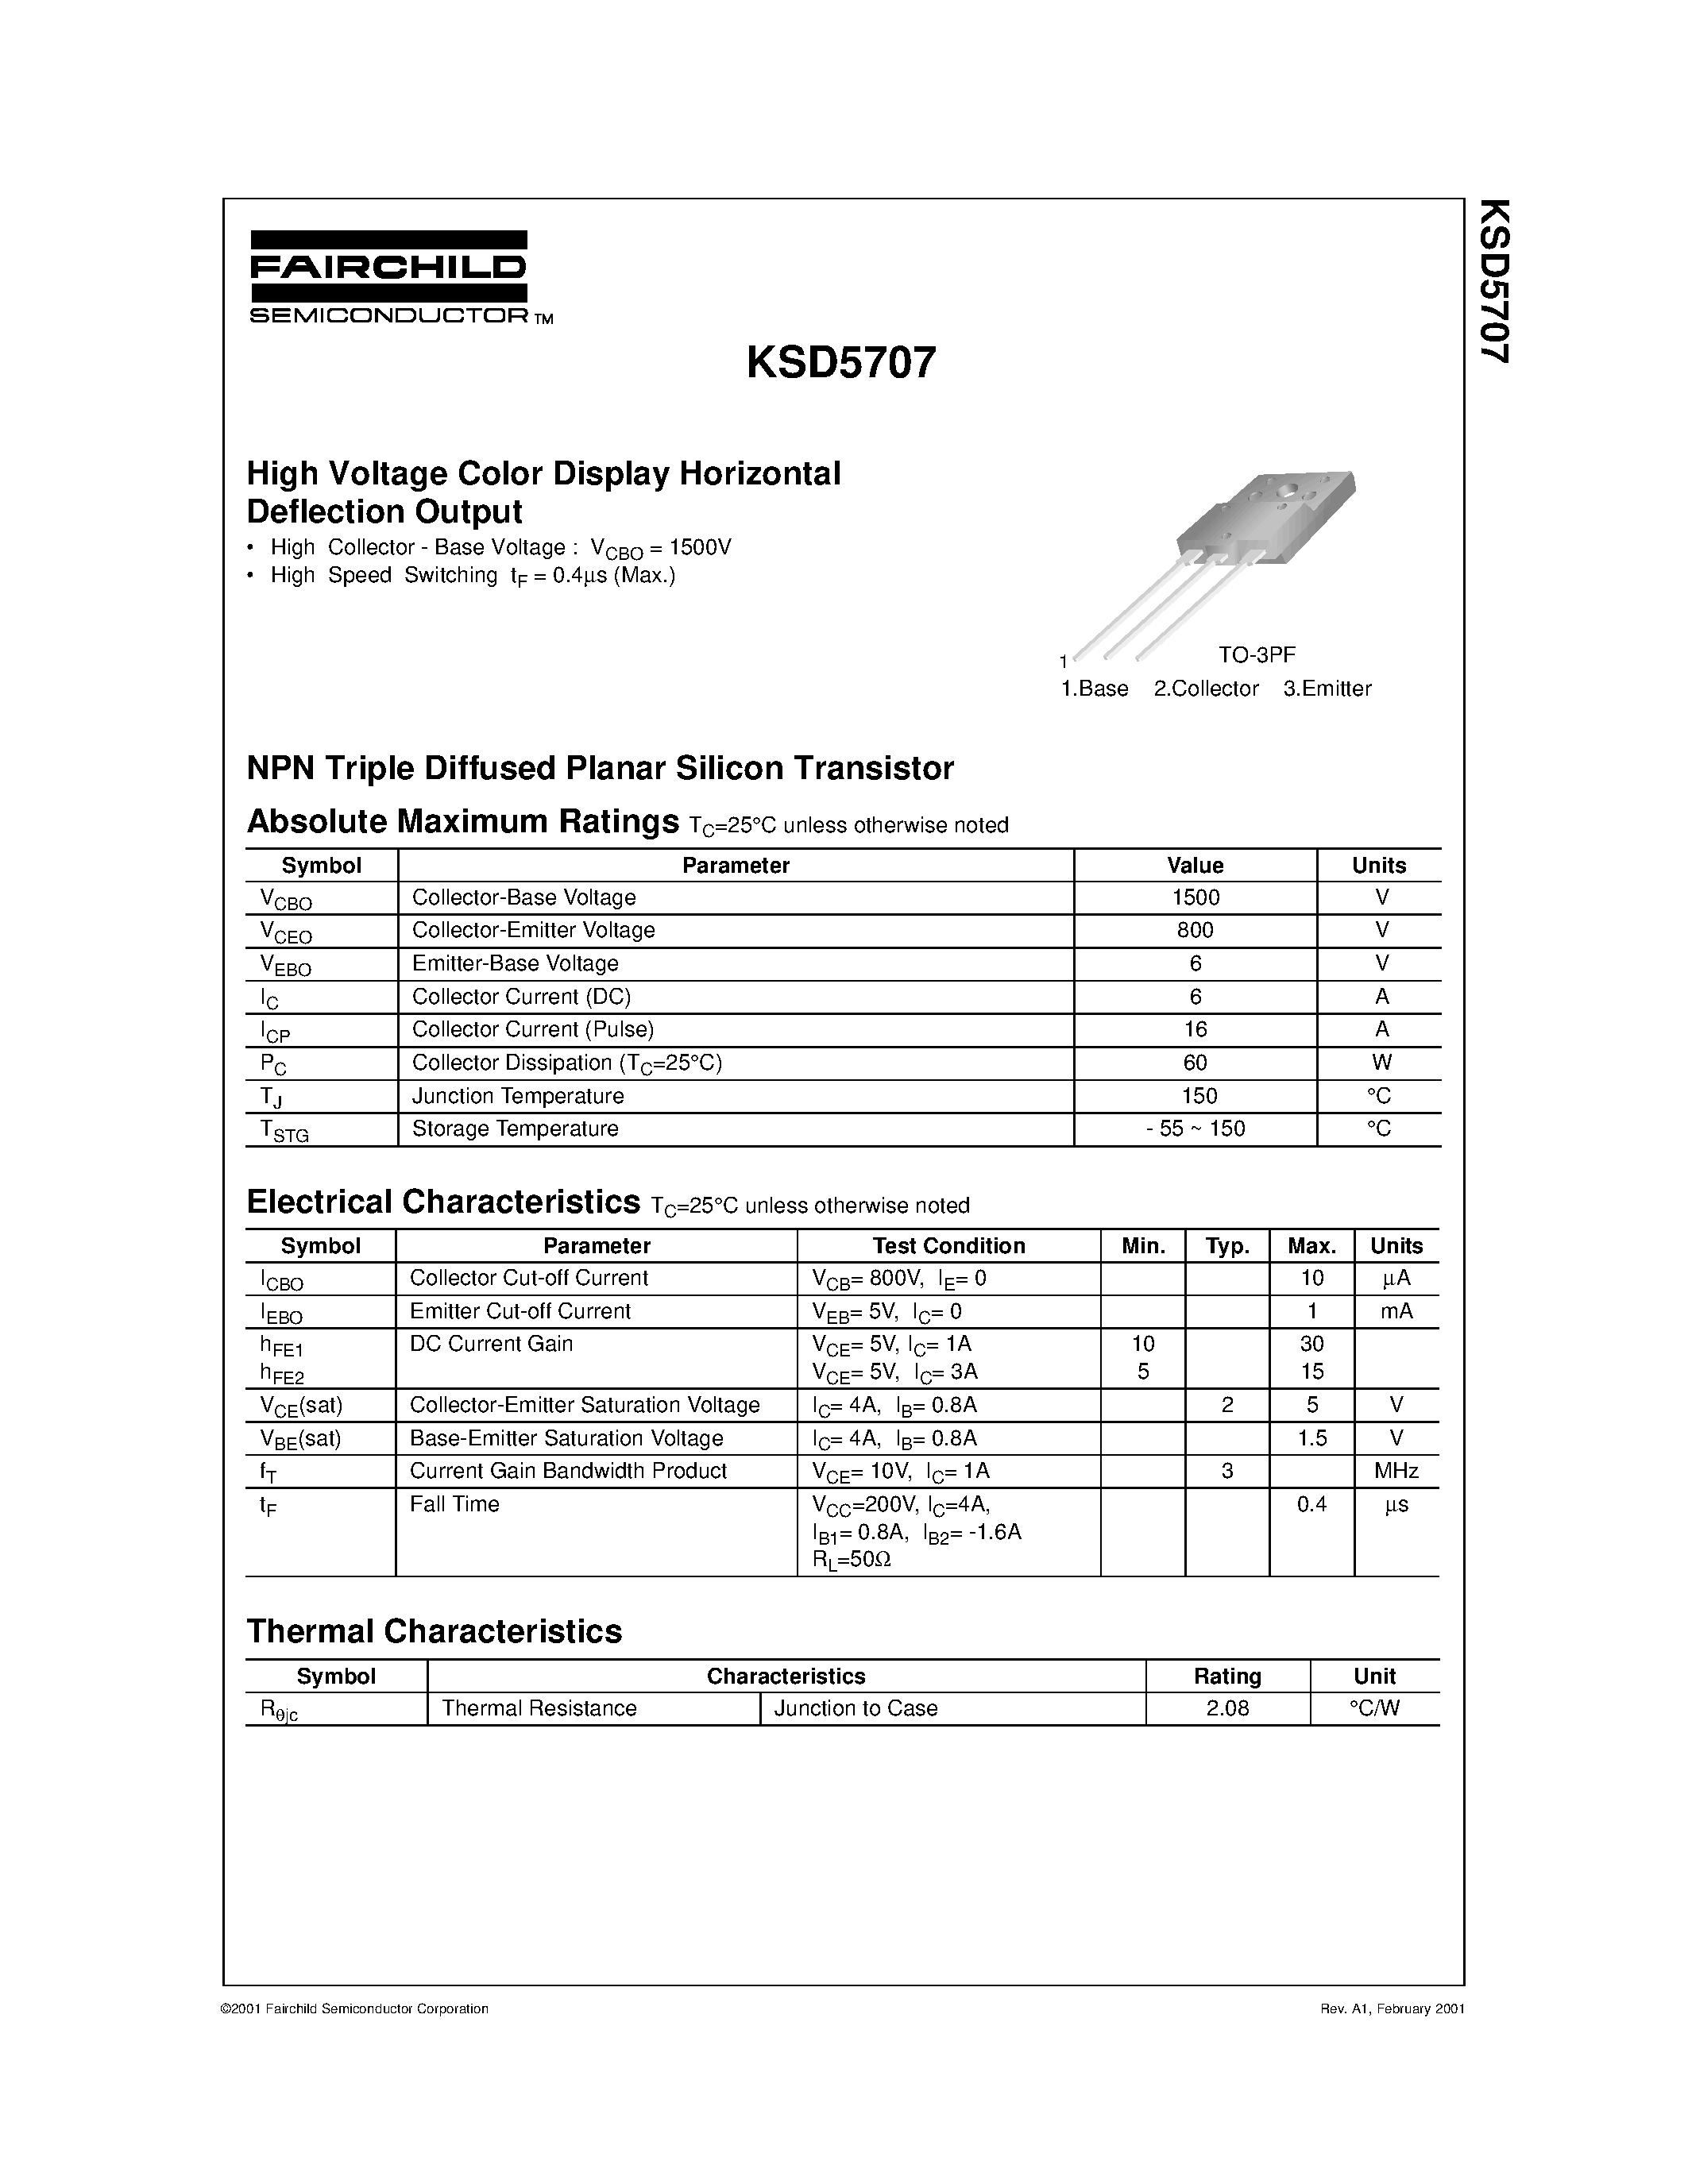 Datasheet KSD5707 - High Voltage Color Display Horizontal Deflection Output page 1